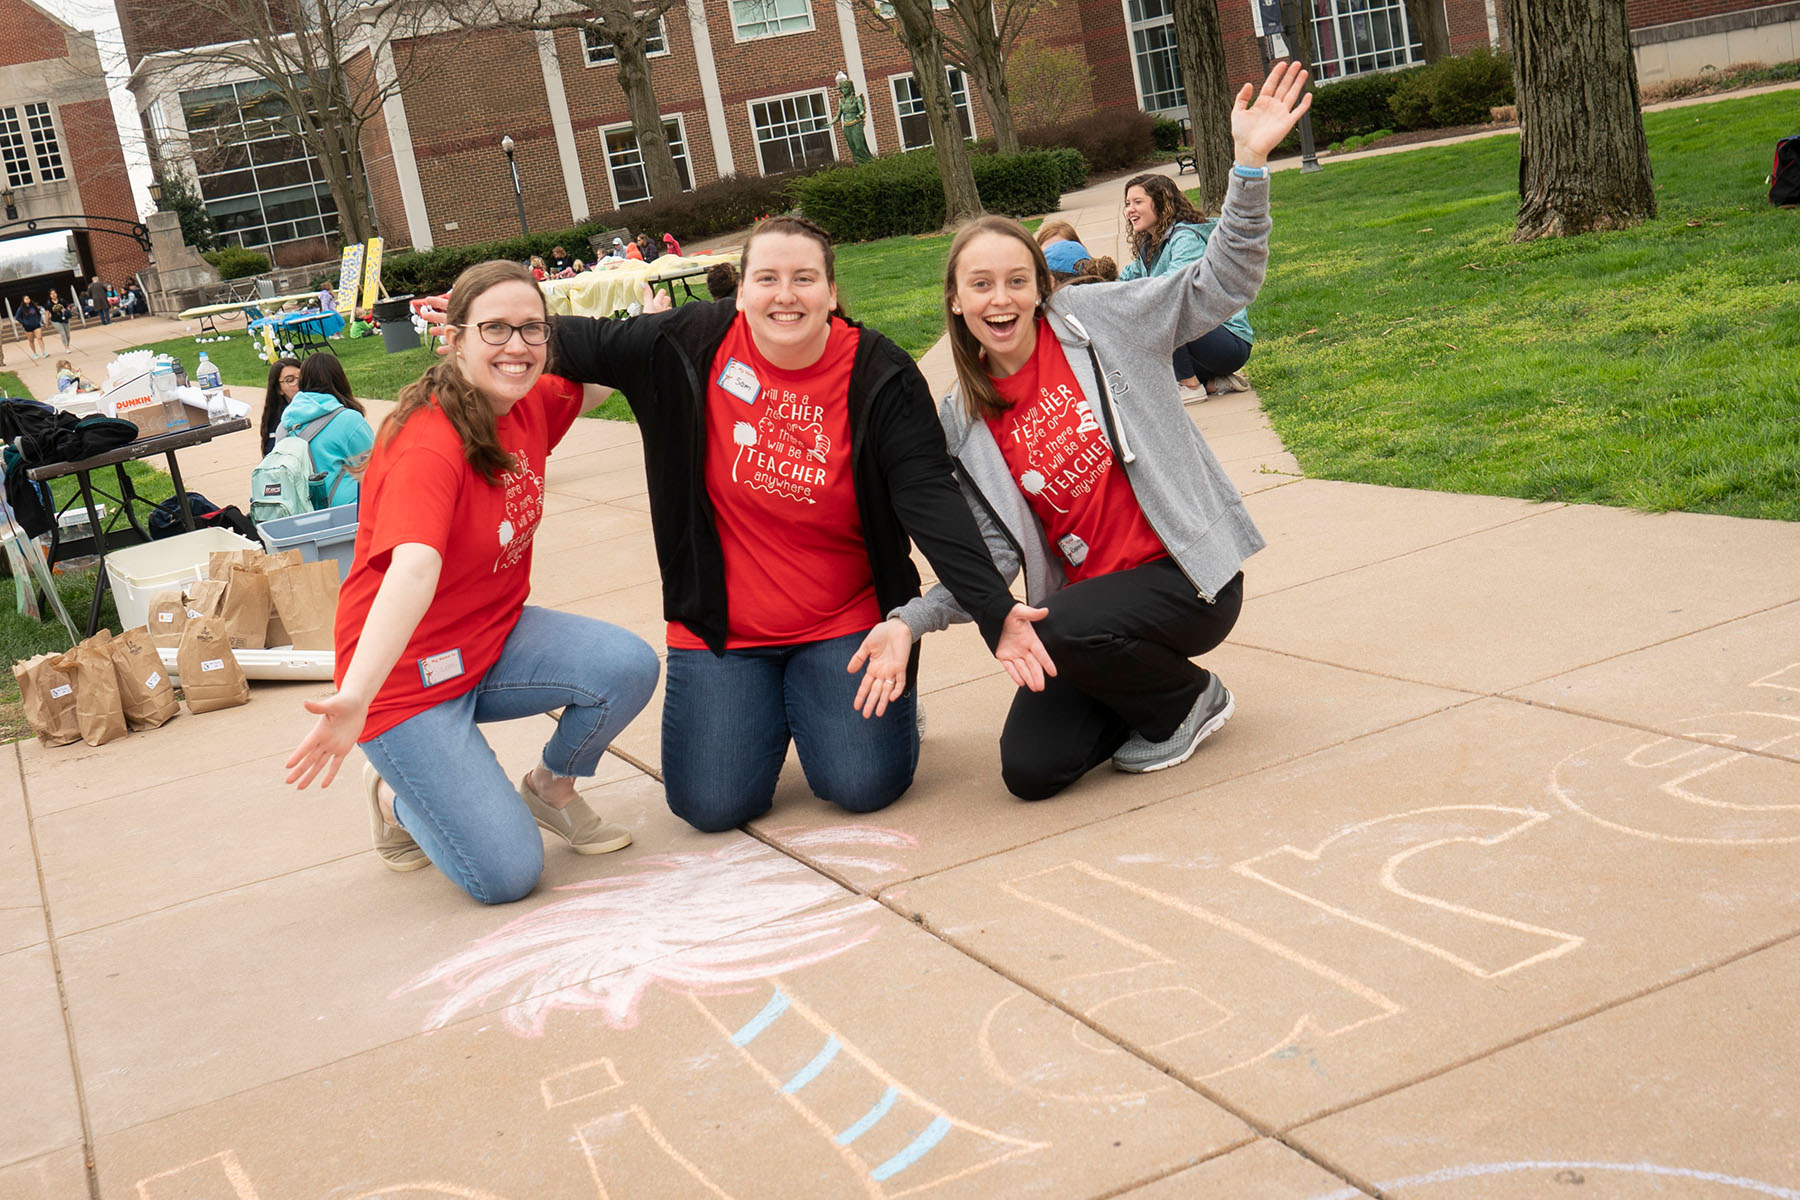 Student educators smiling by sidewalk chalk